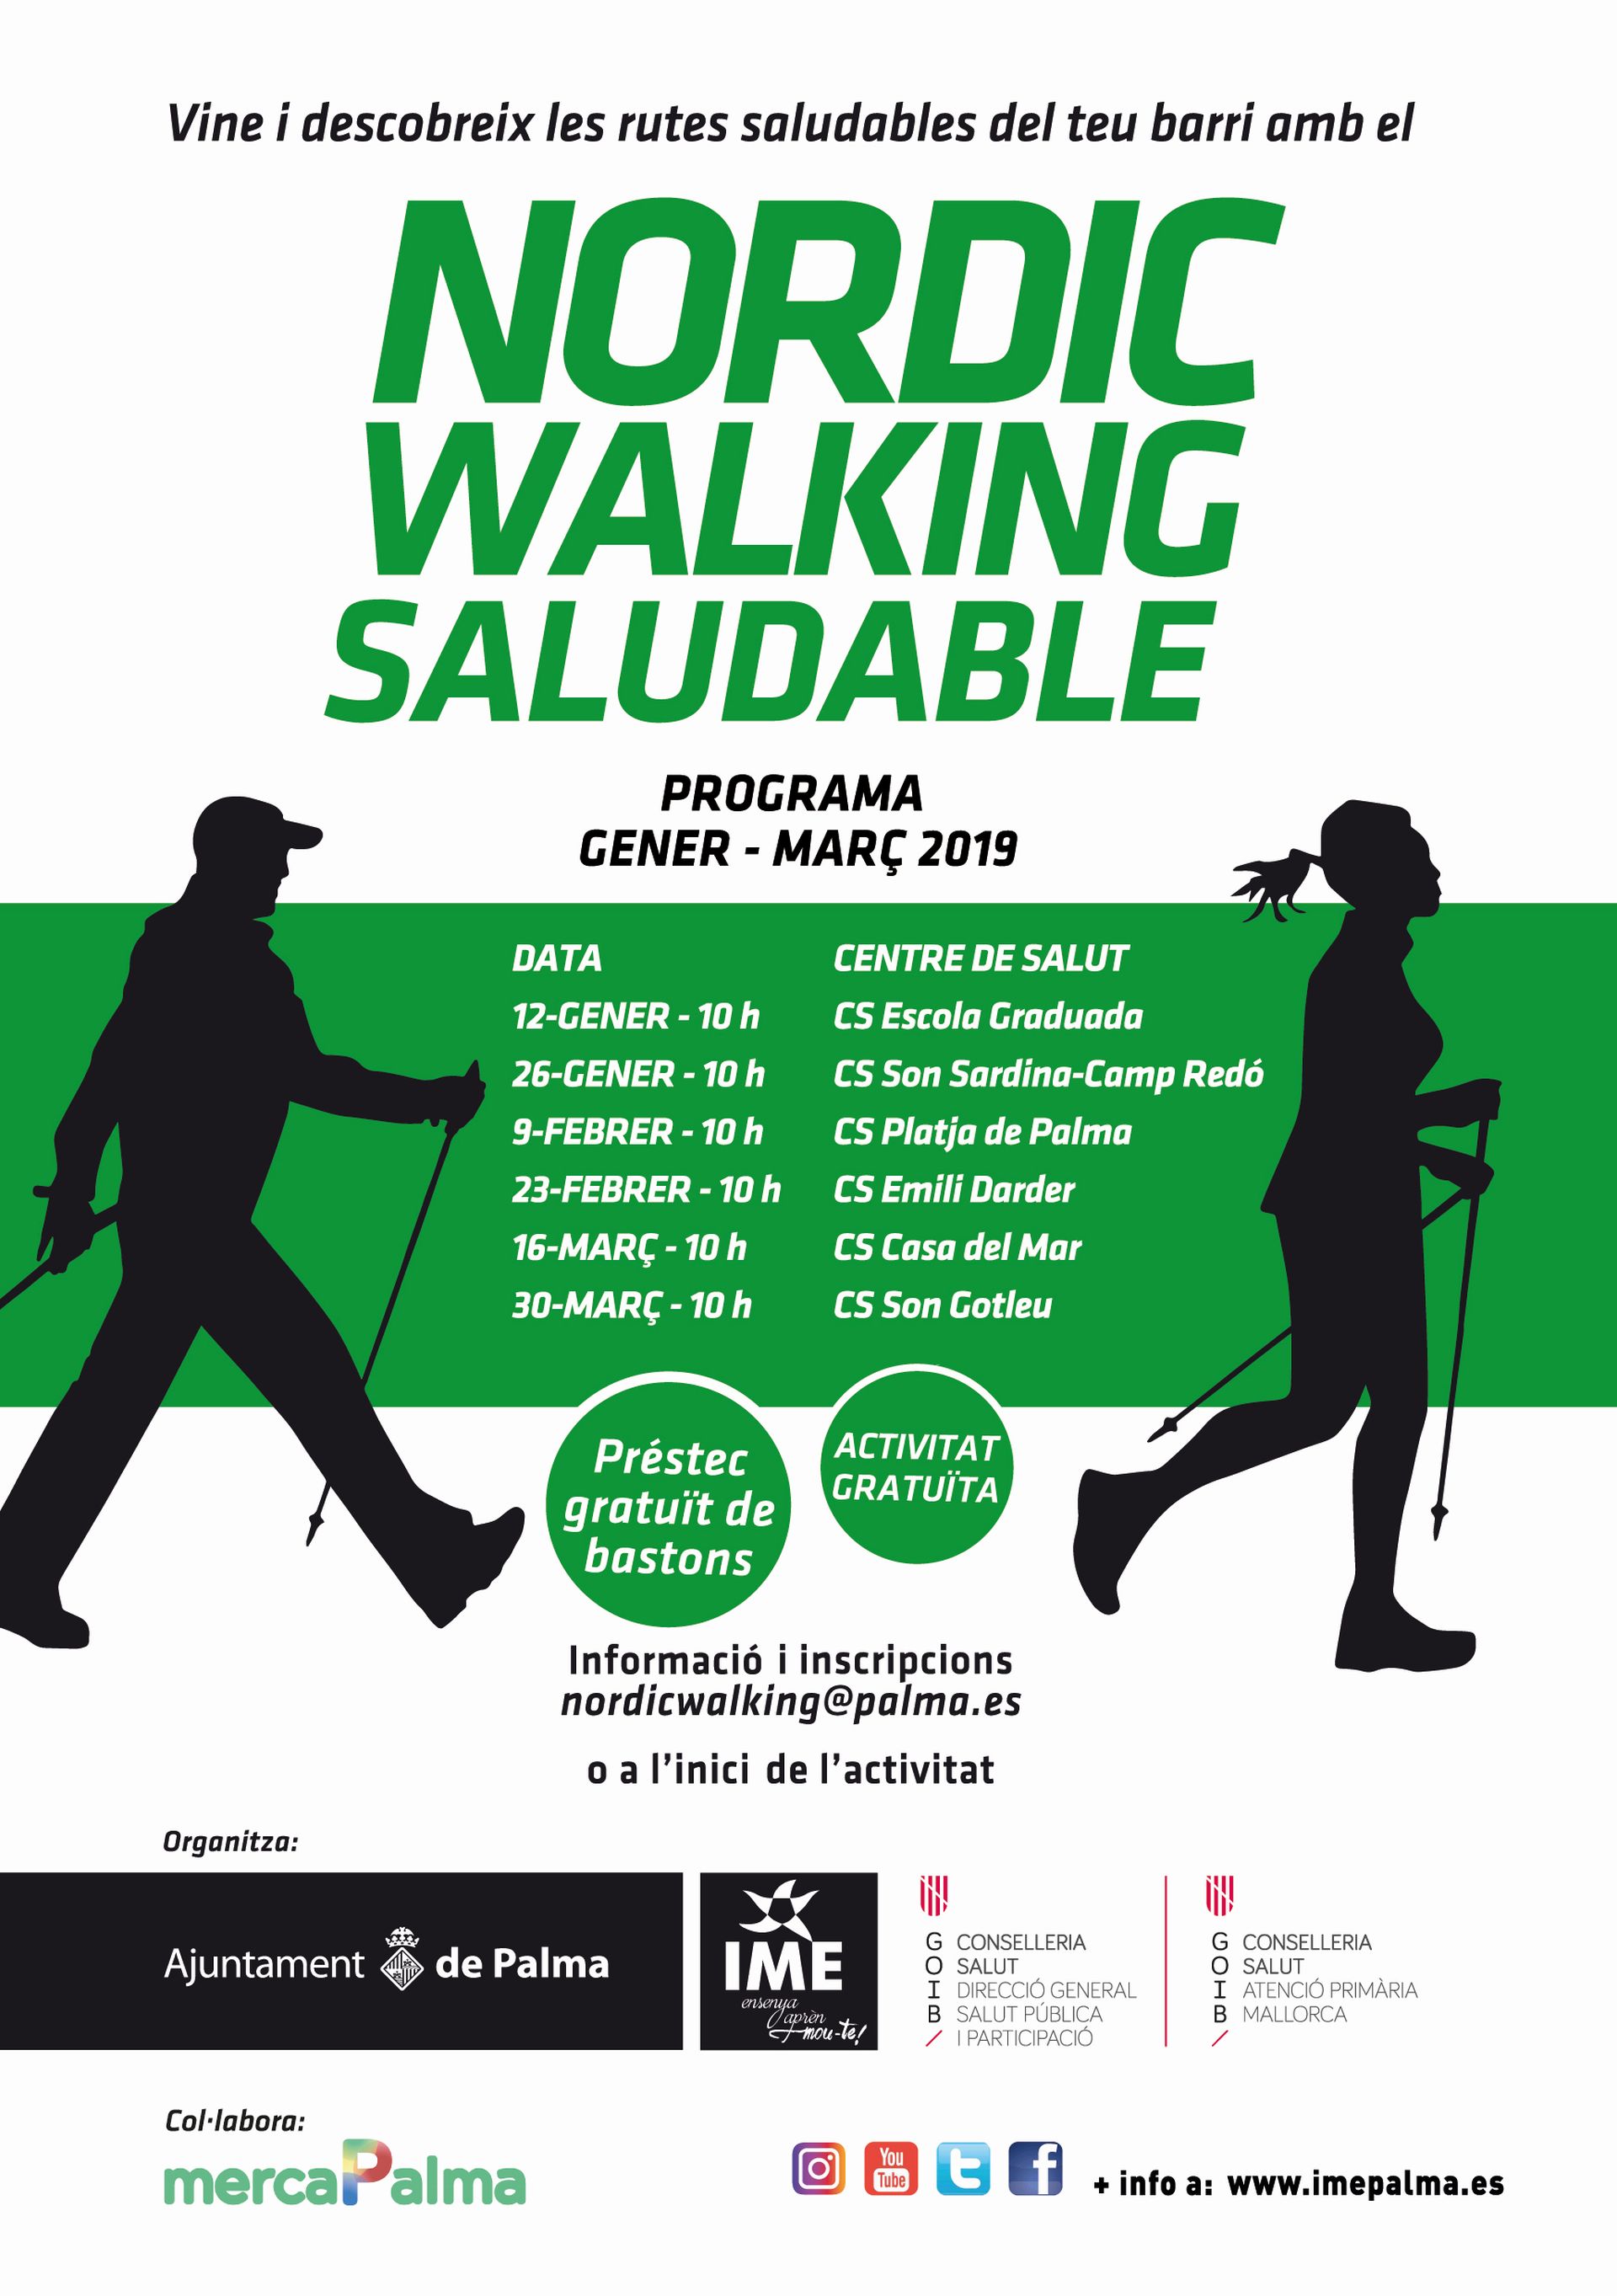 Nordic Walking Saludable gener març 2019